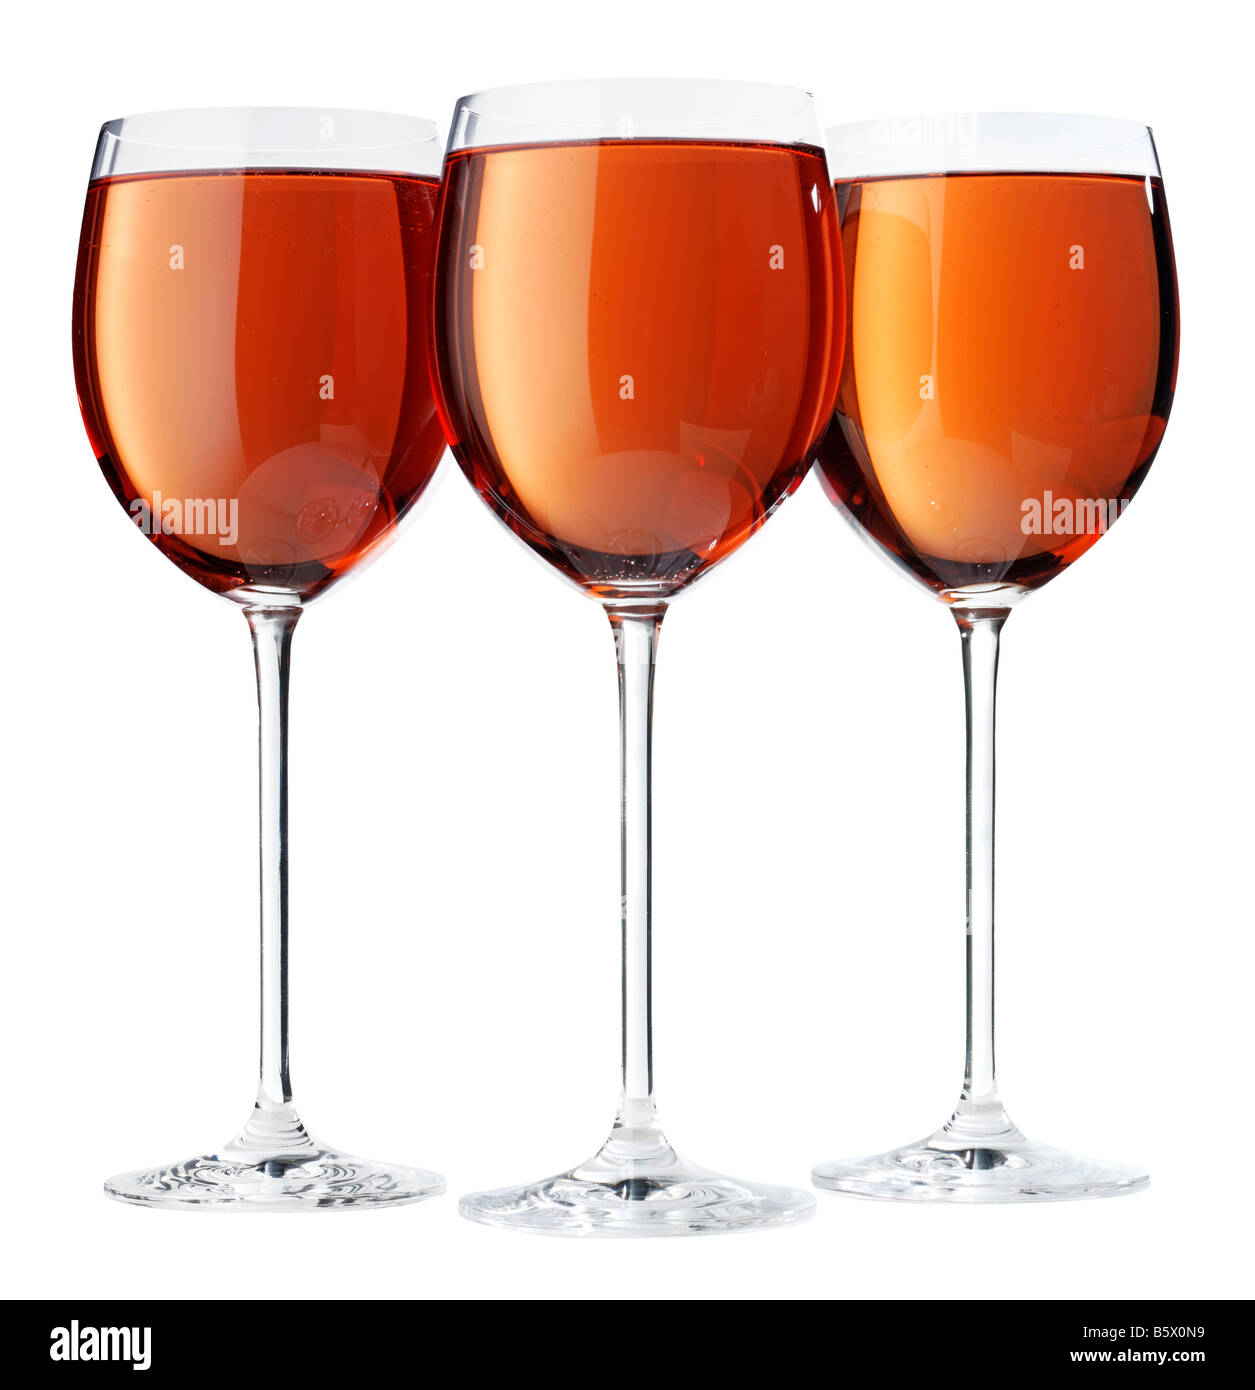 THREE GLASSES OF ROSE WINE Stock Photo